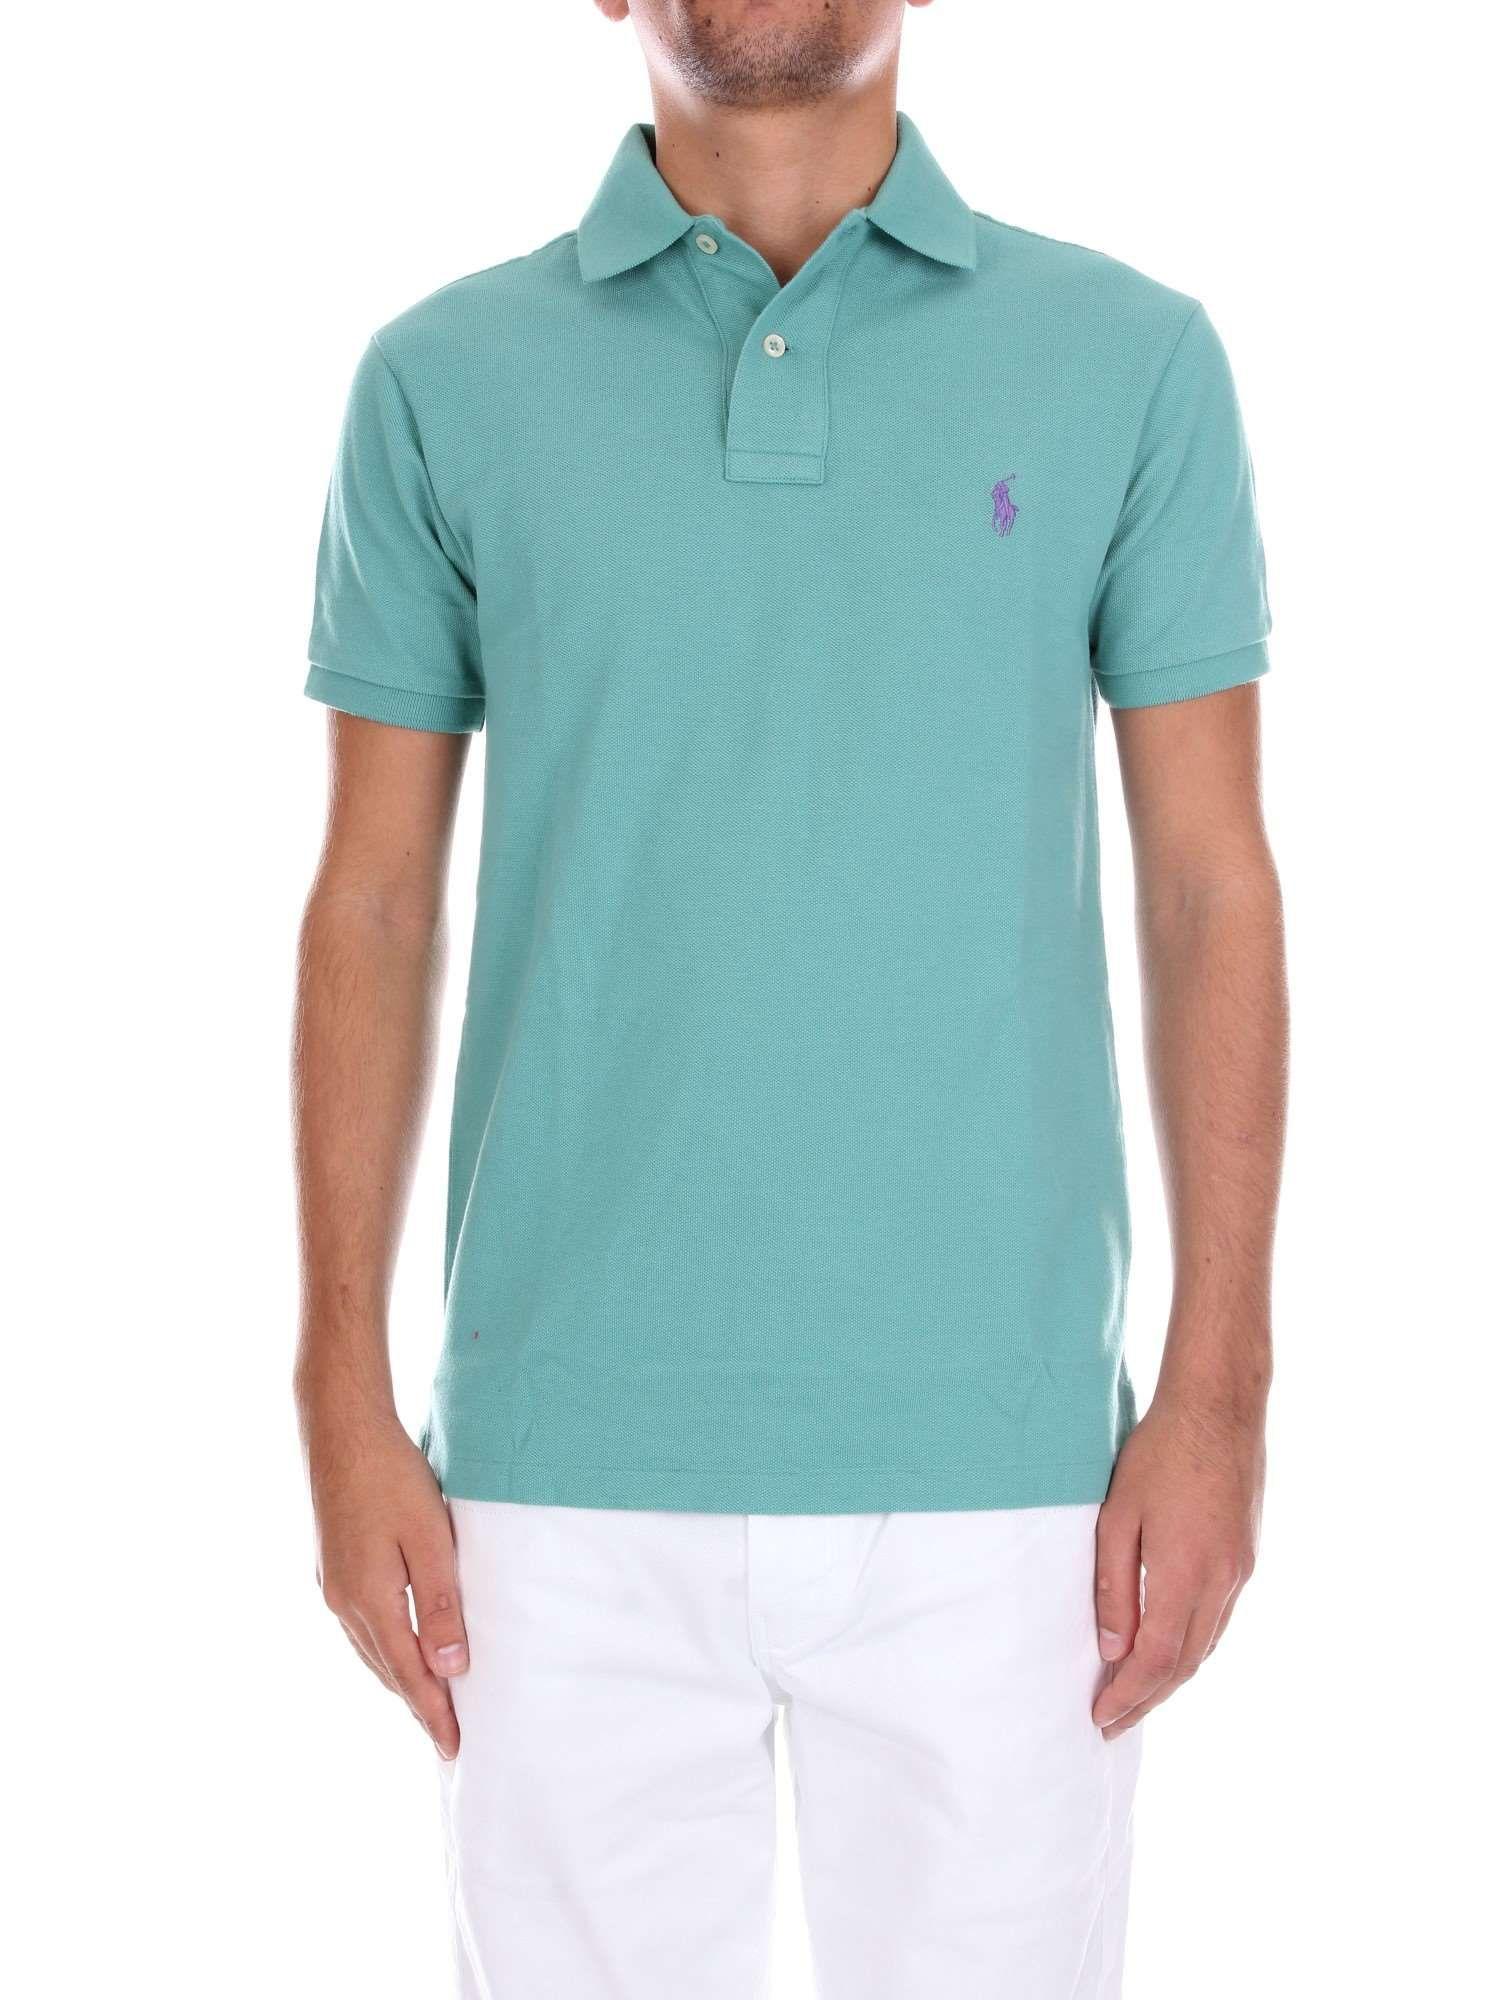 Ralph Lauren Light Blue Cotton Polo Shirt in Blue for Men - Lyst